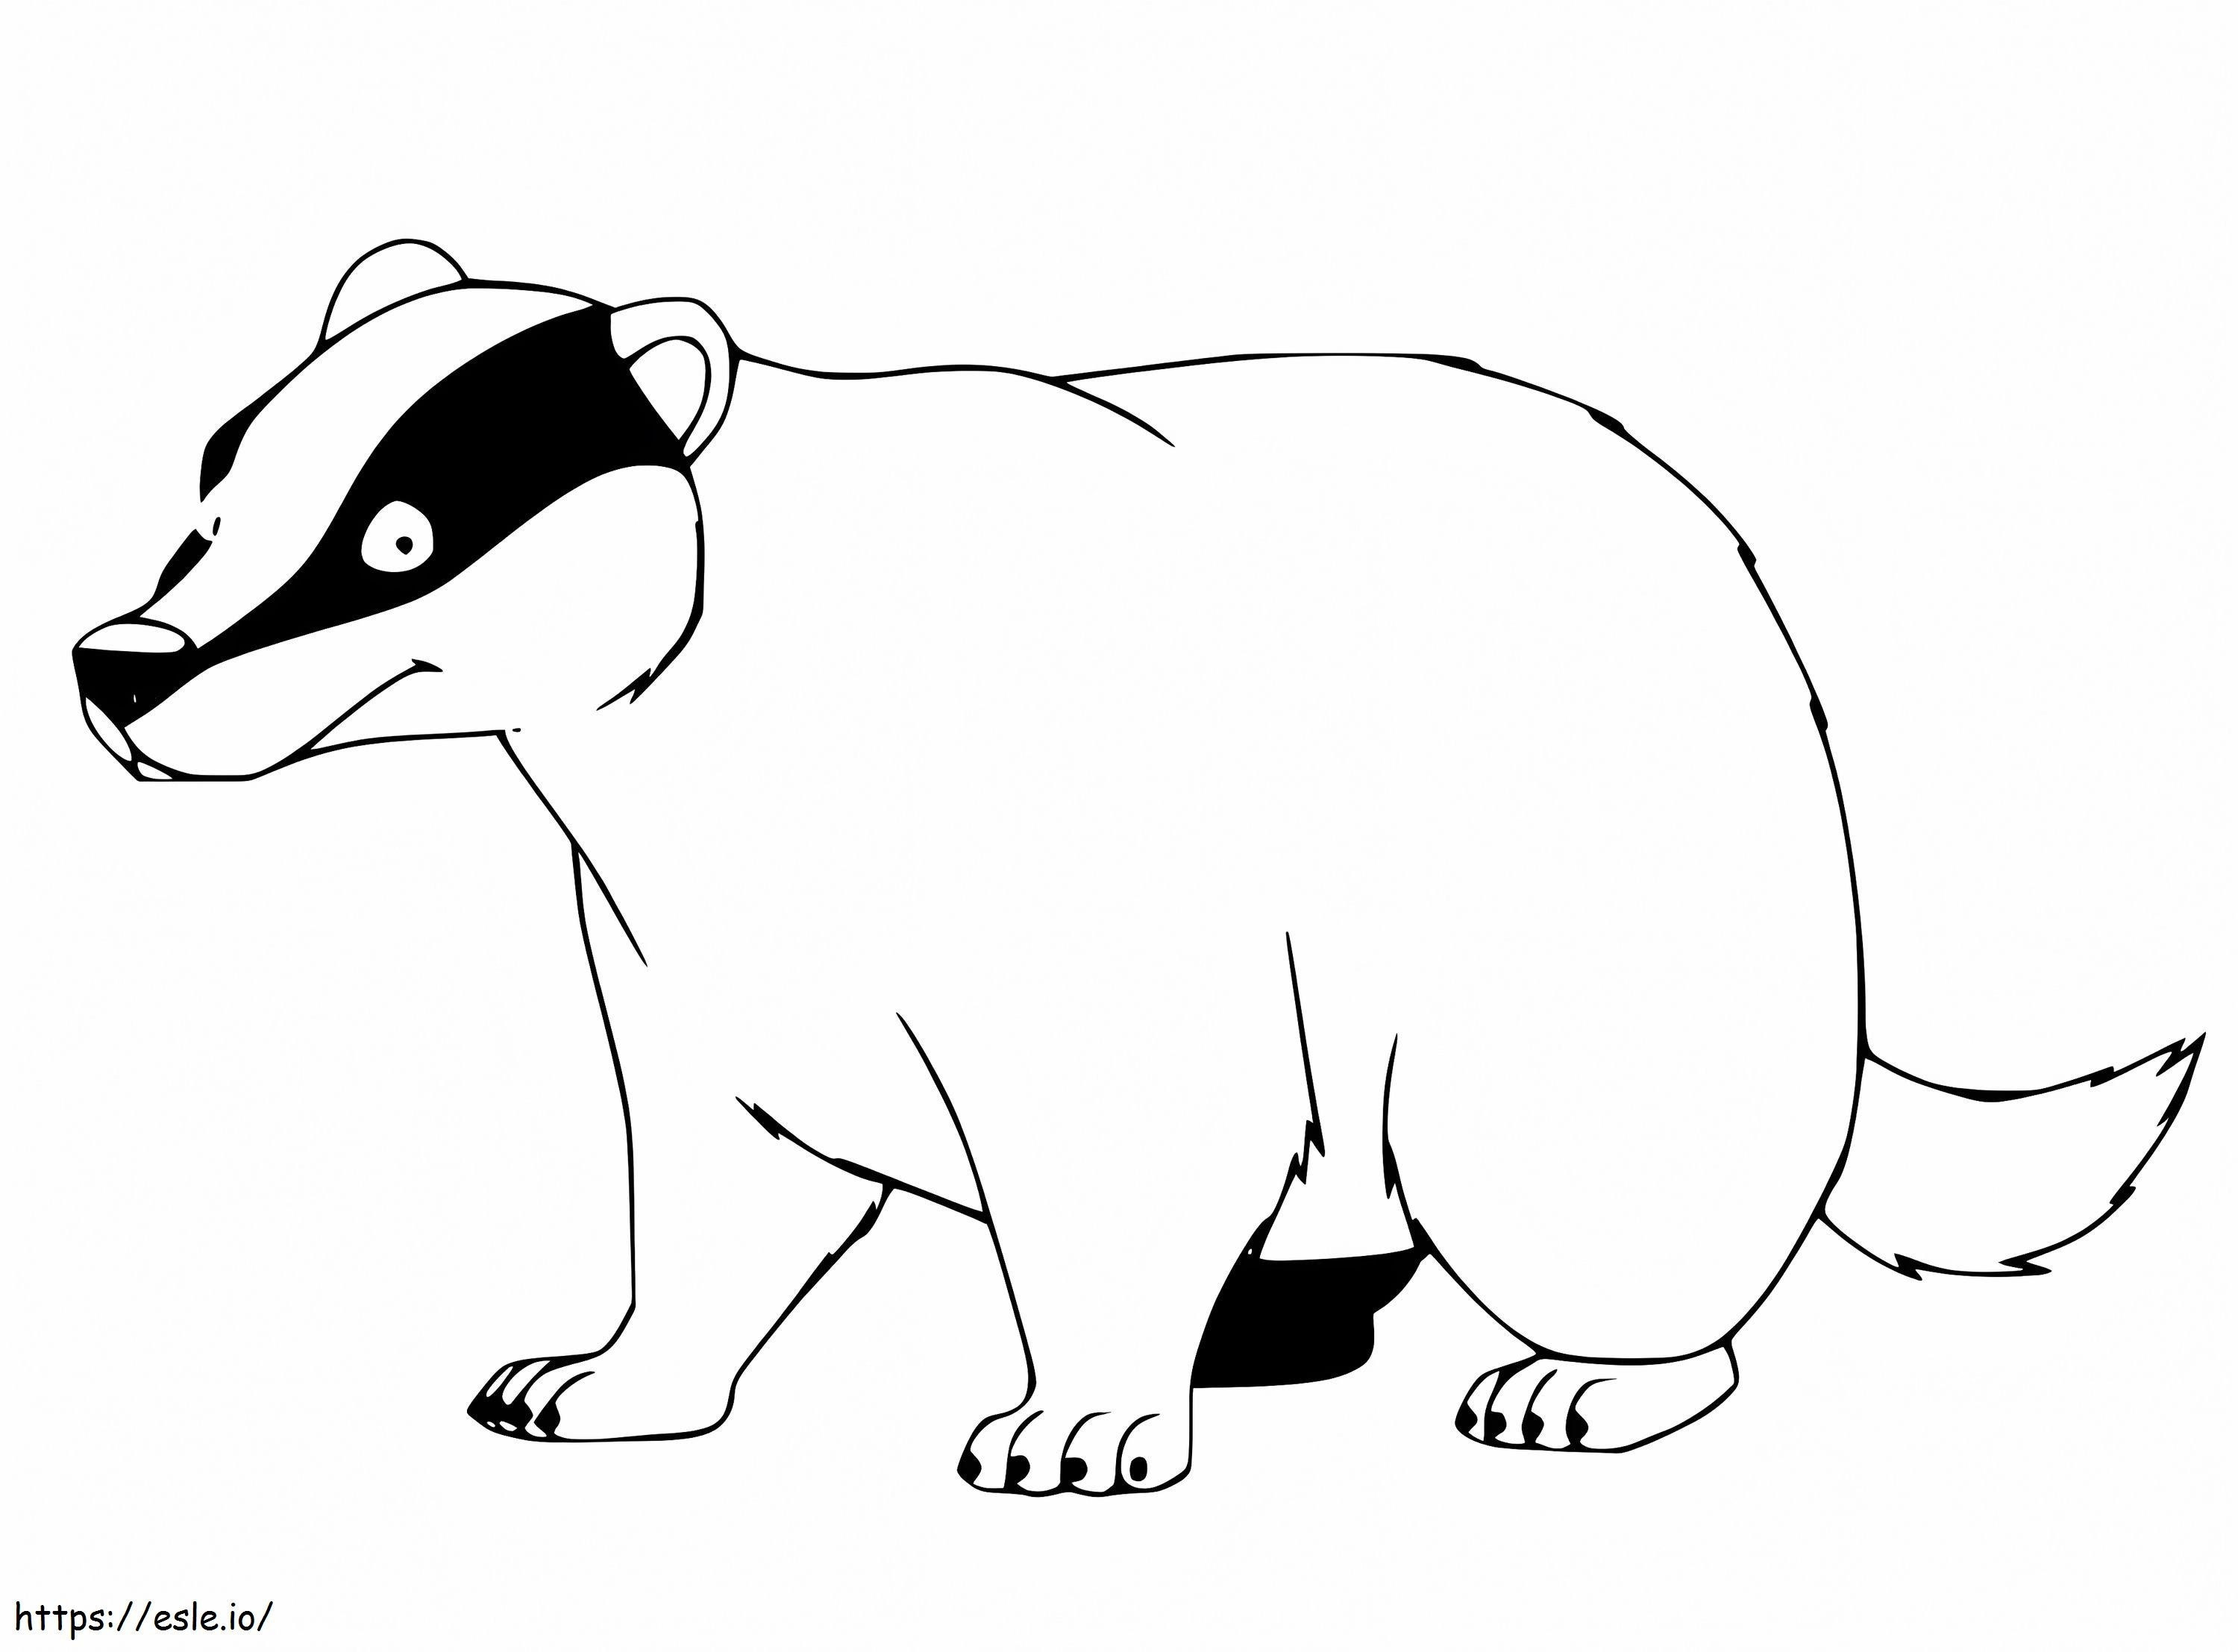 Fun Badger coloring page